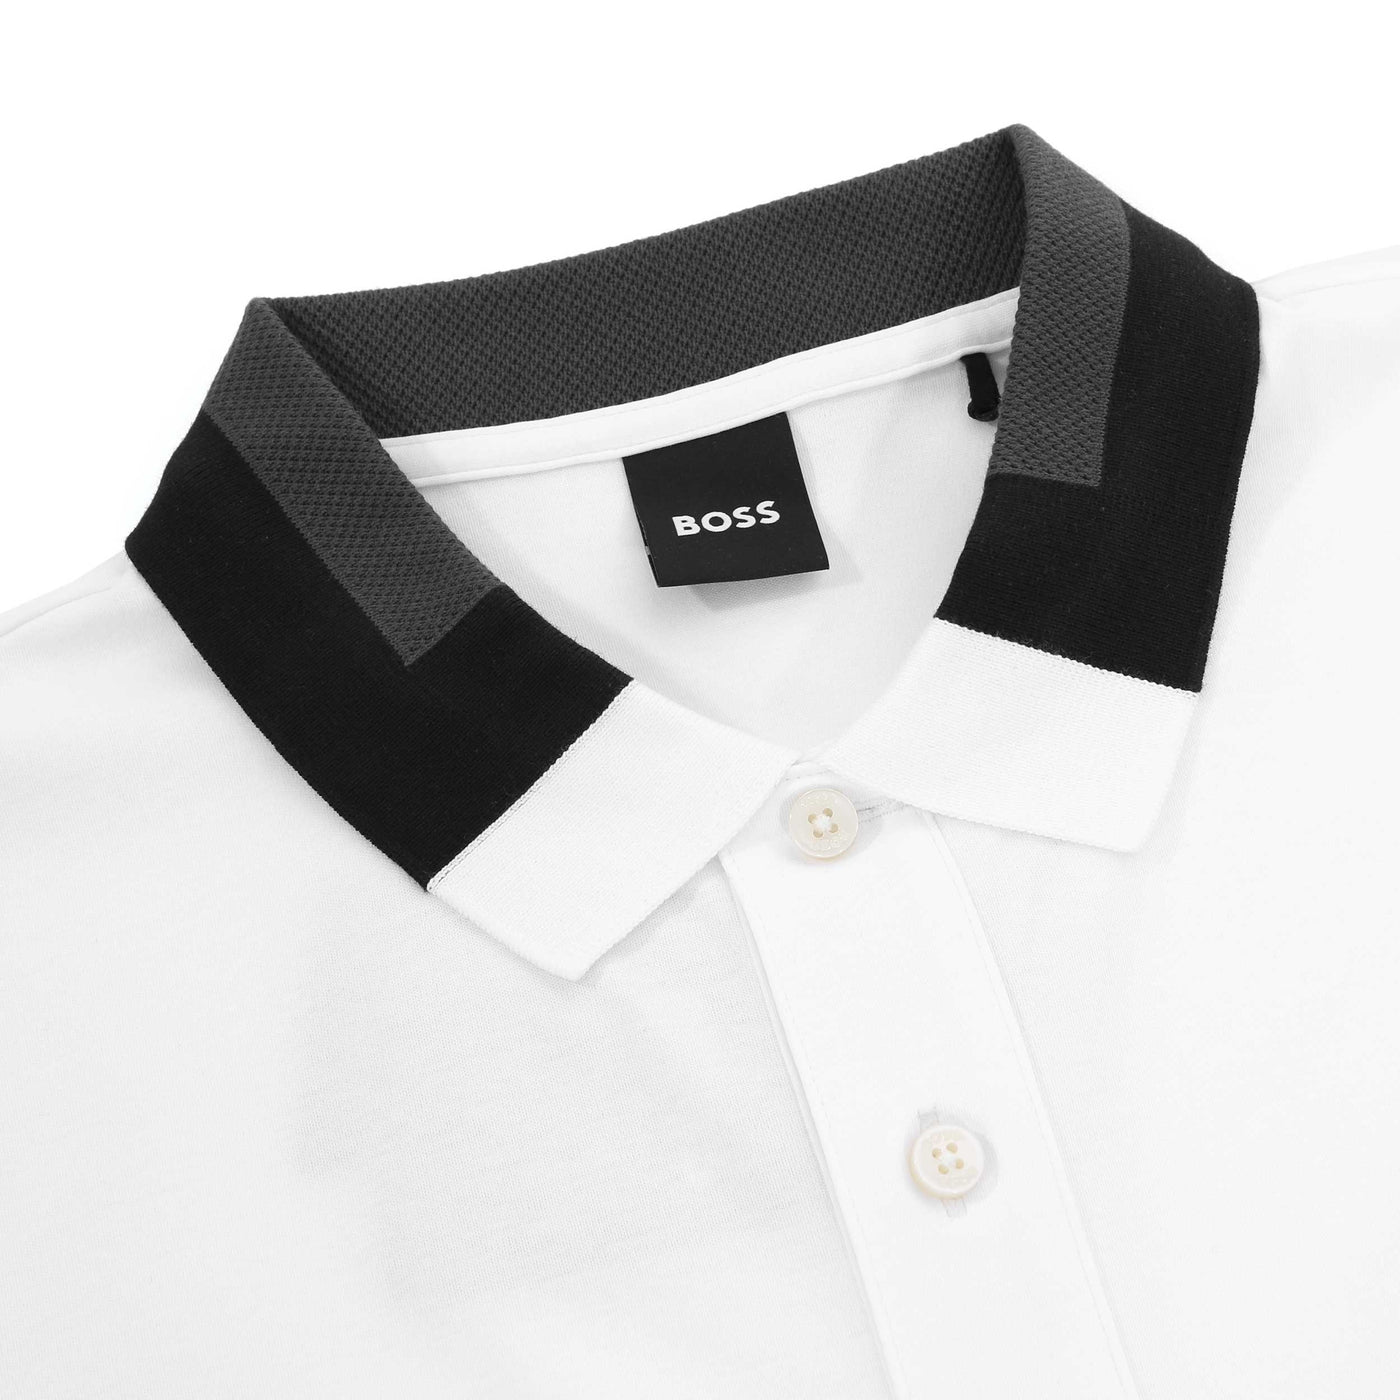 BOSS Phillipson 116 Polo Shirt in White Collar